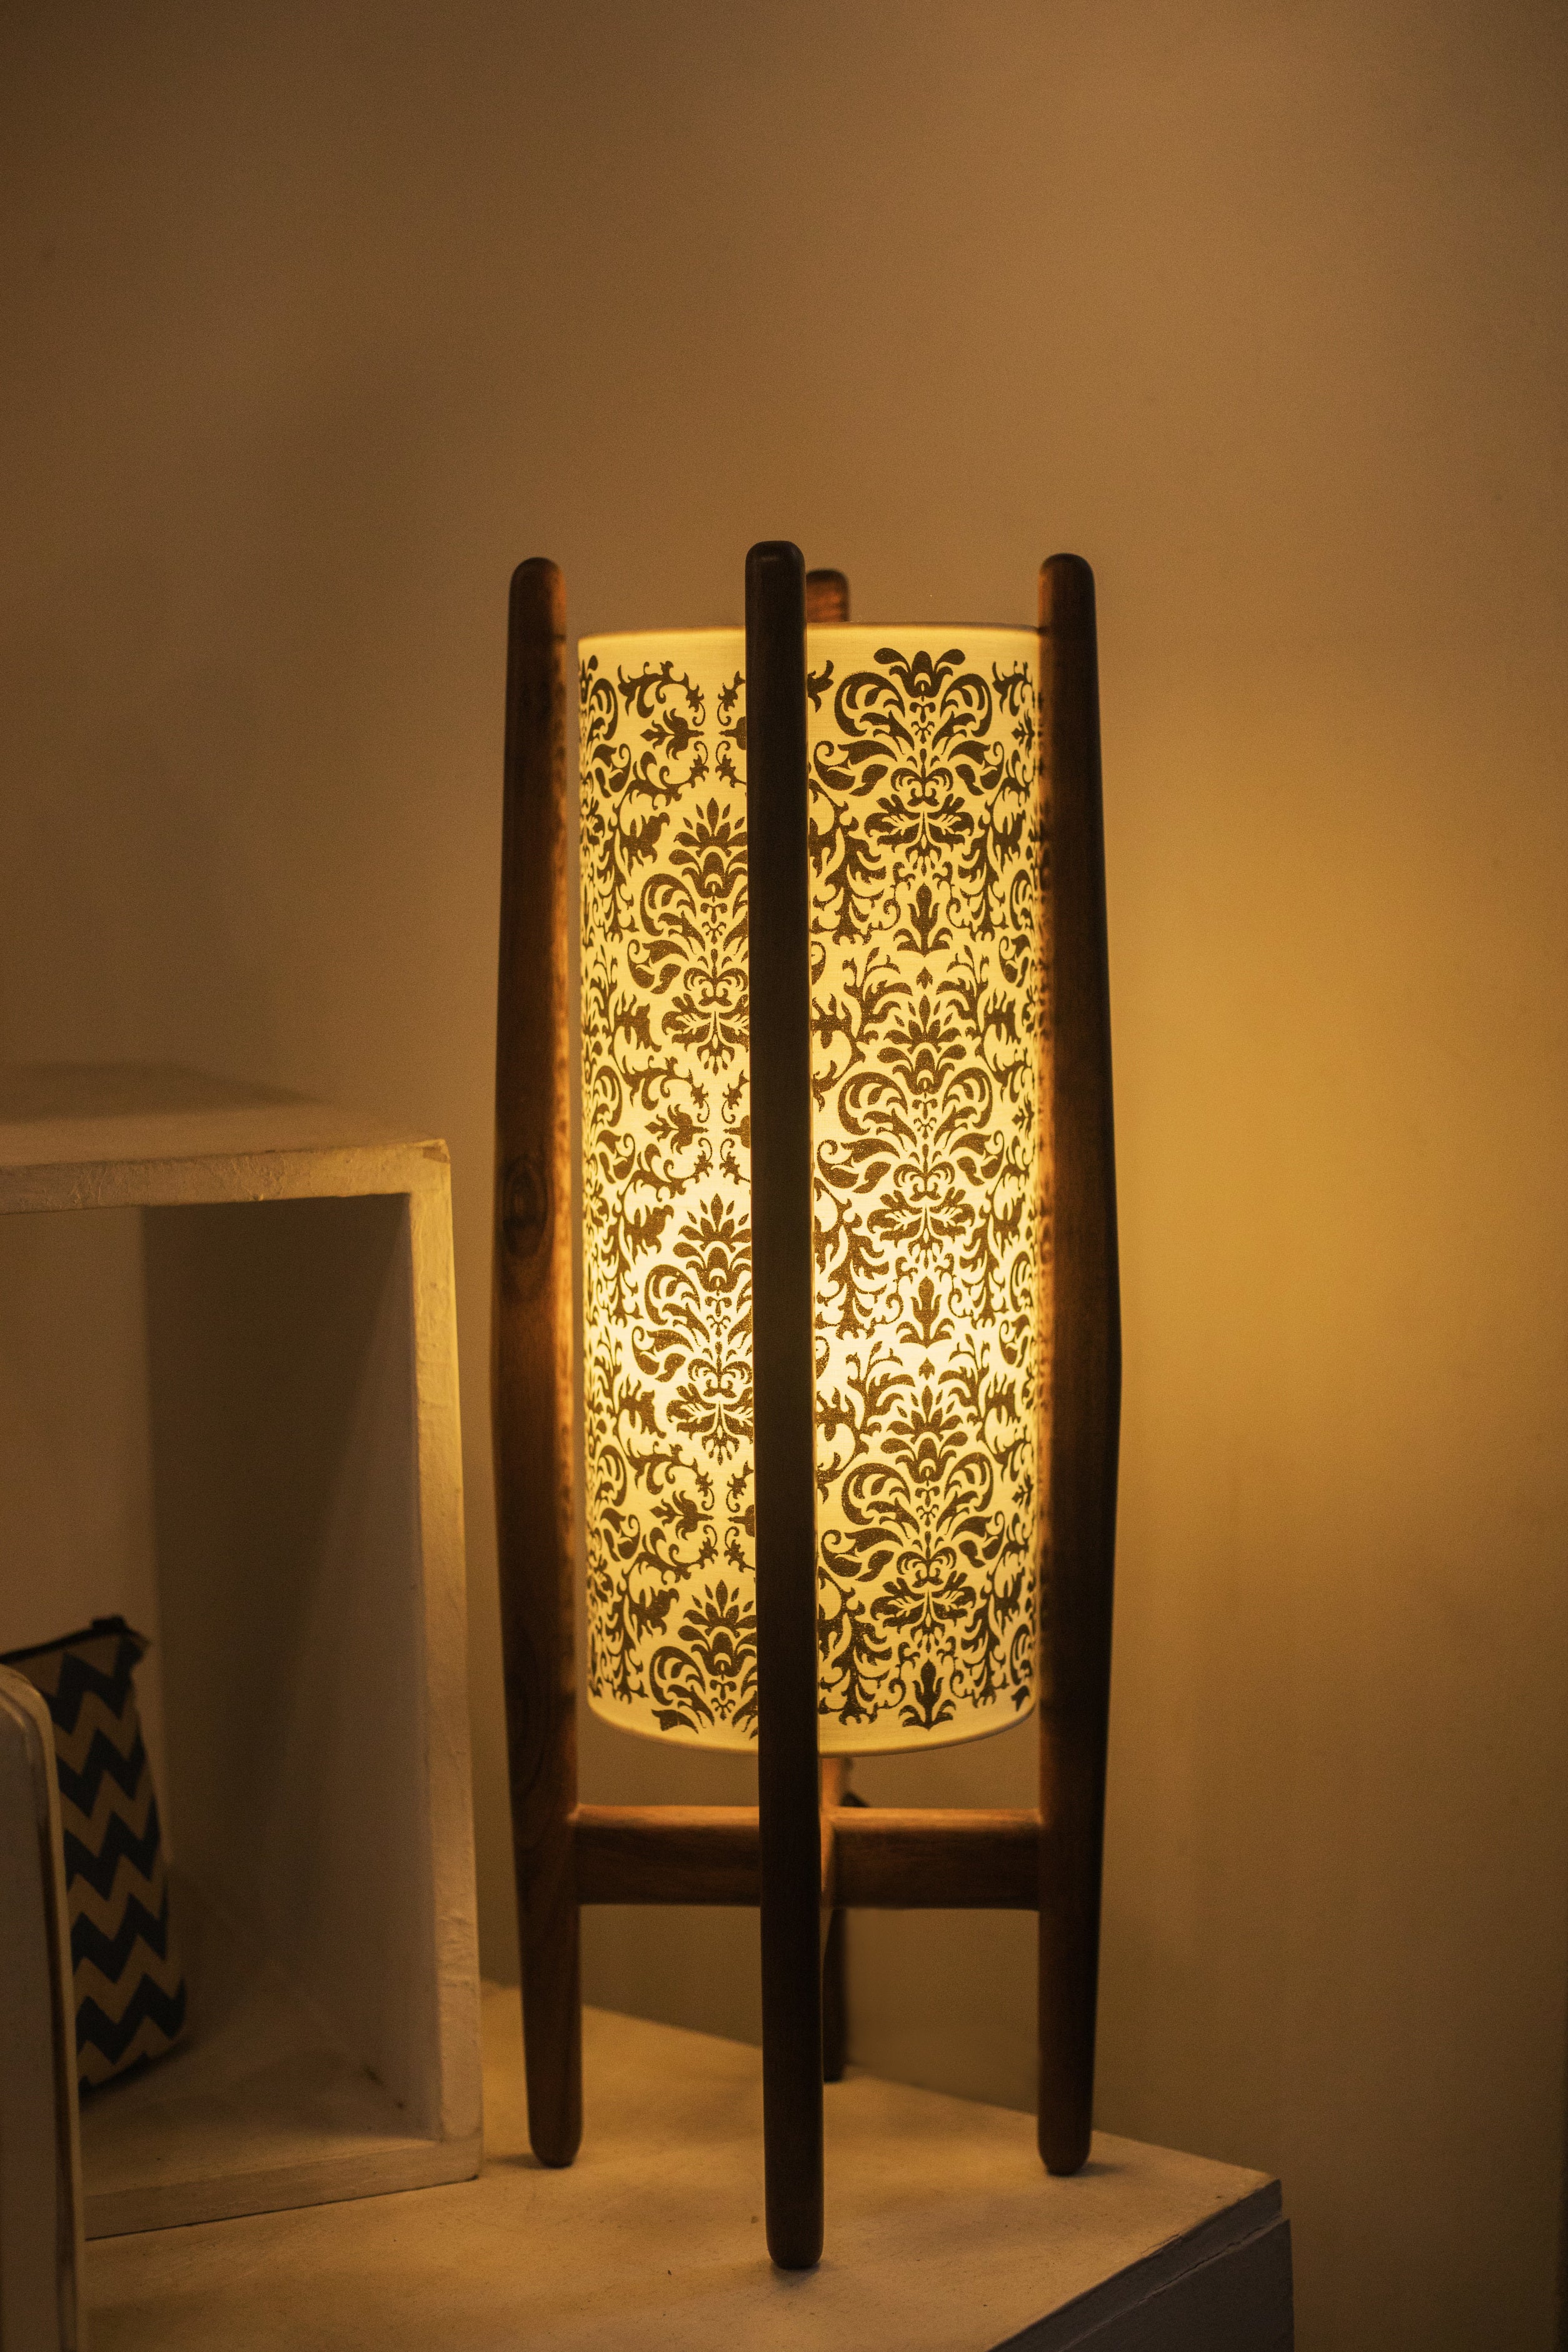 Alea Table Lamp